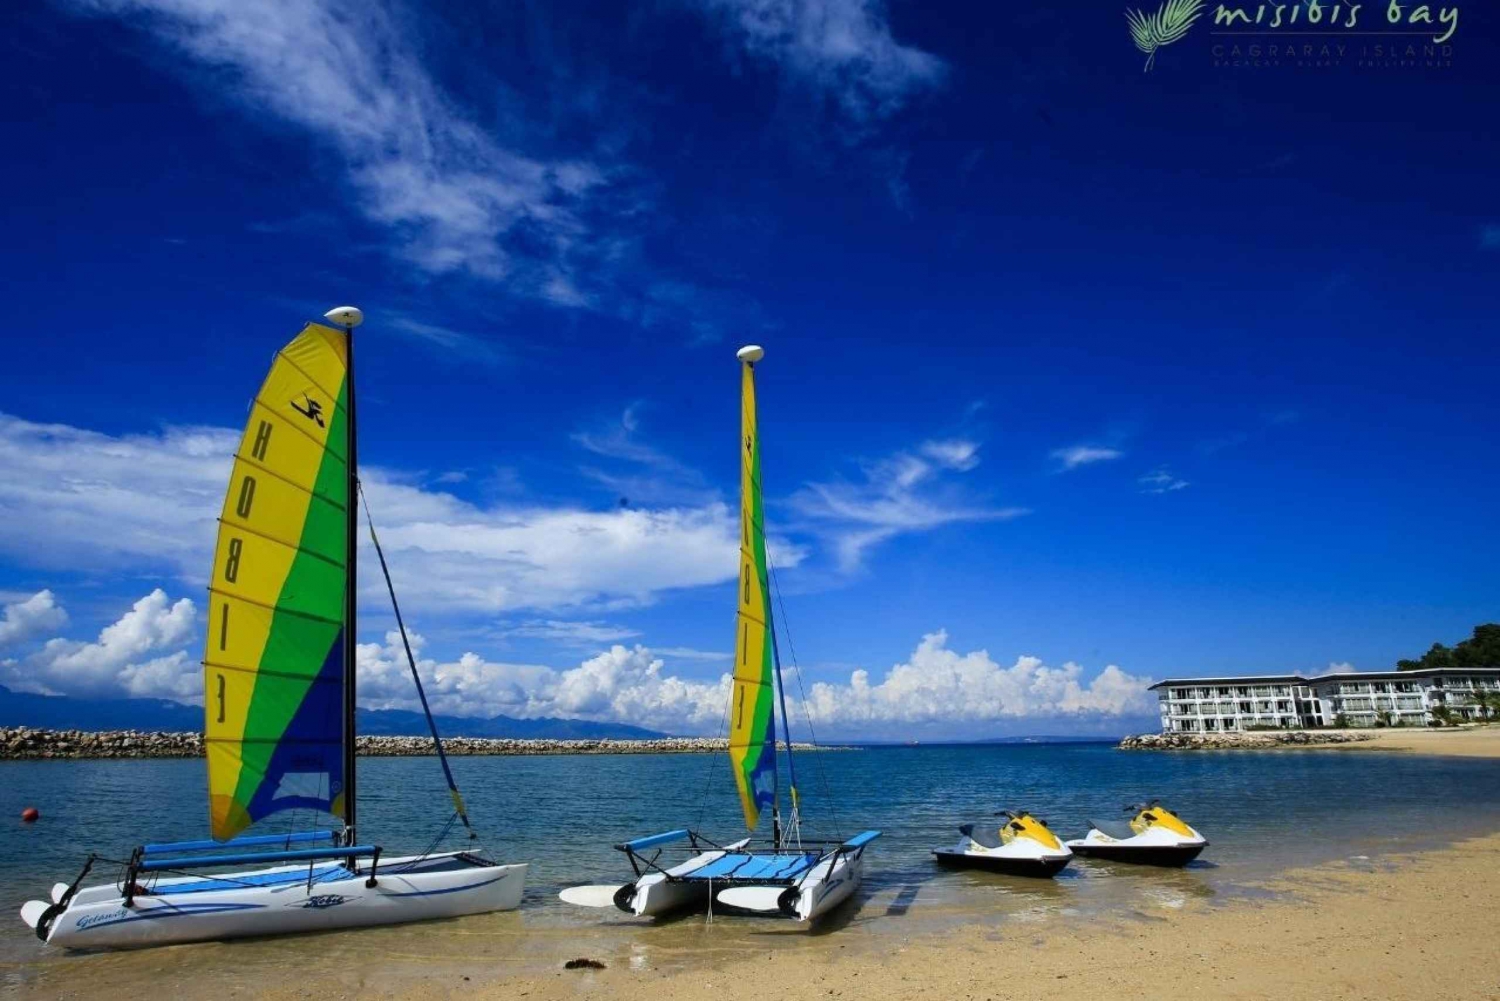 Bicol Philippines: Exclusive Misibis Bay Resort Day Tour